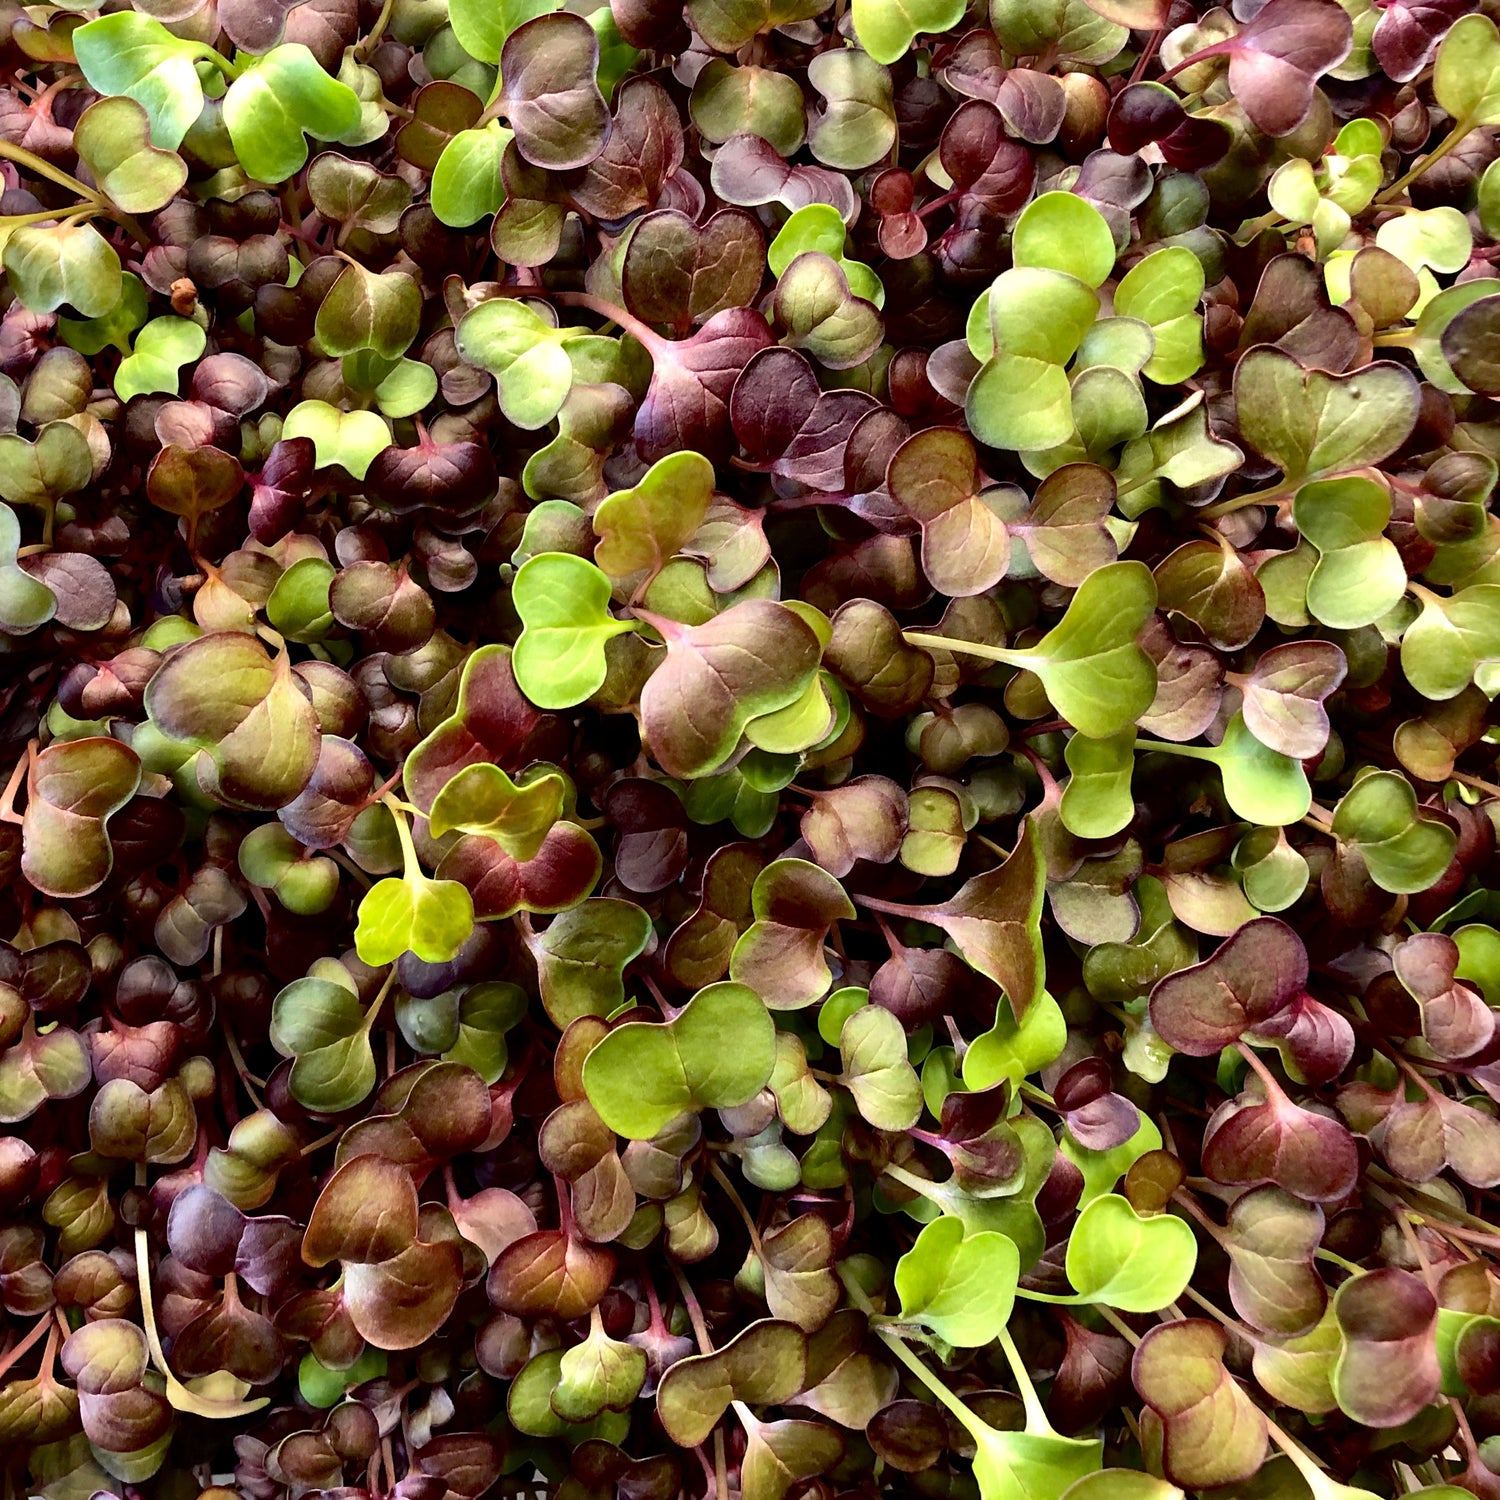 Radish microgreens have bright green and purple heart shaped leaves